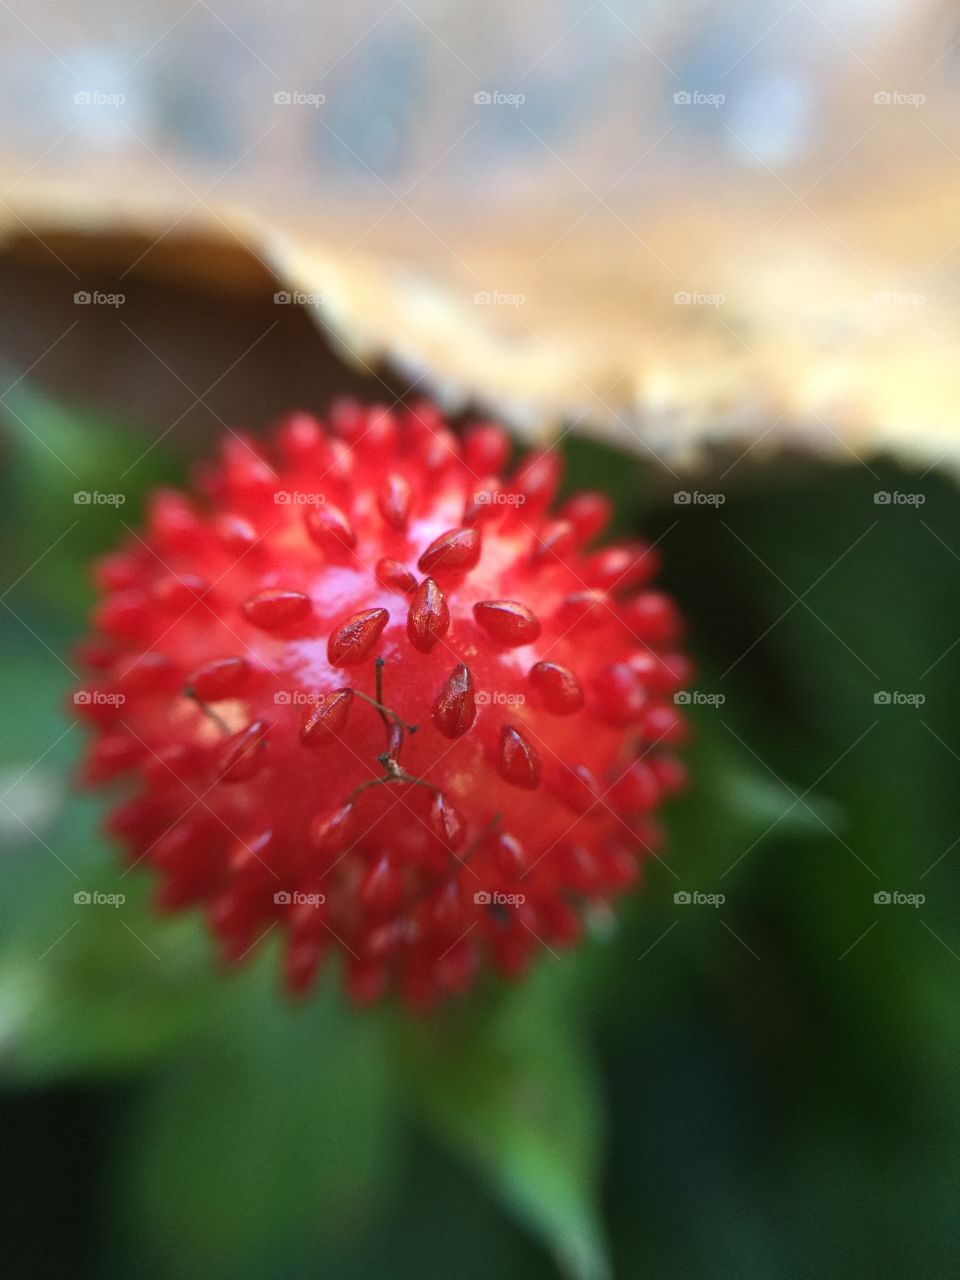 Macro red berry